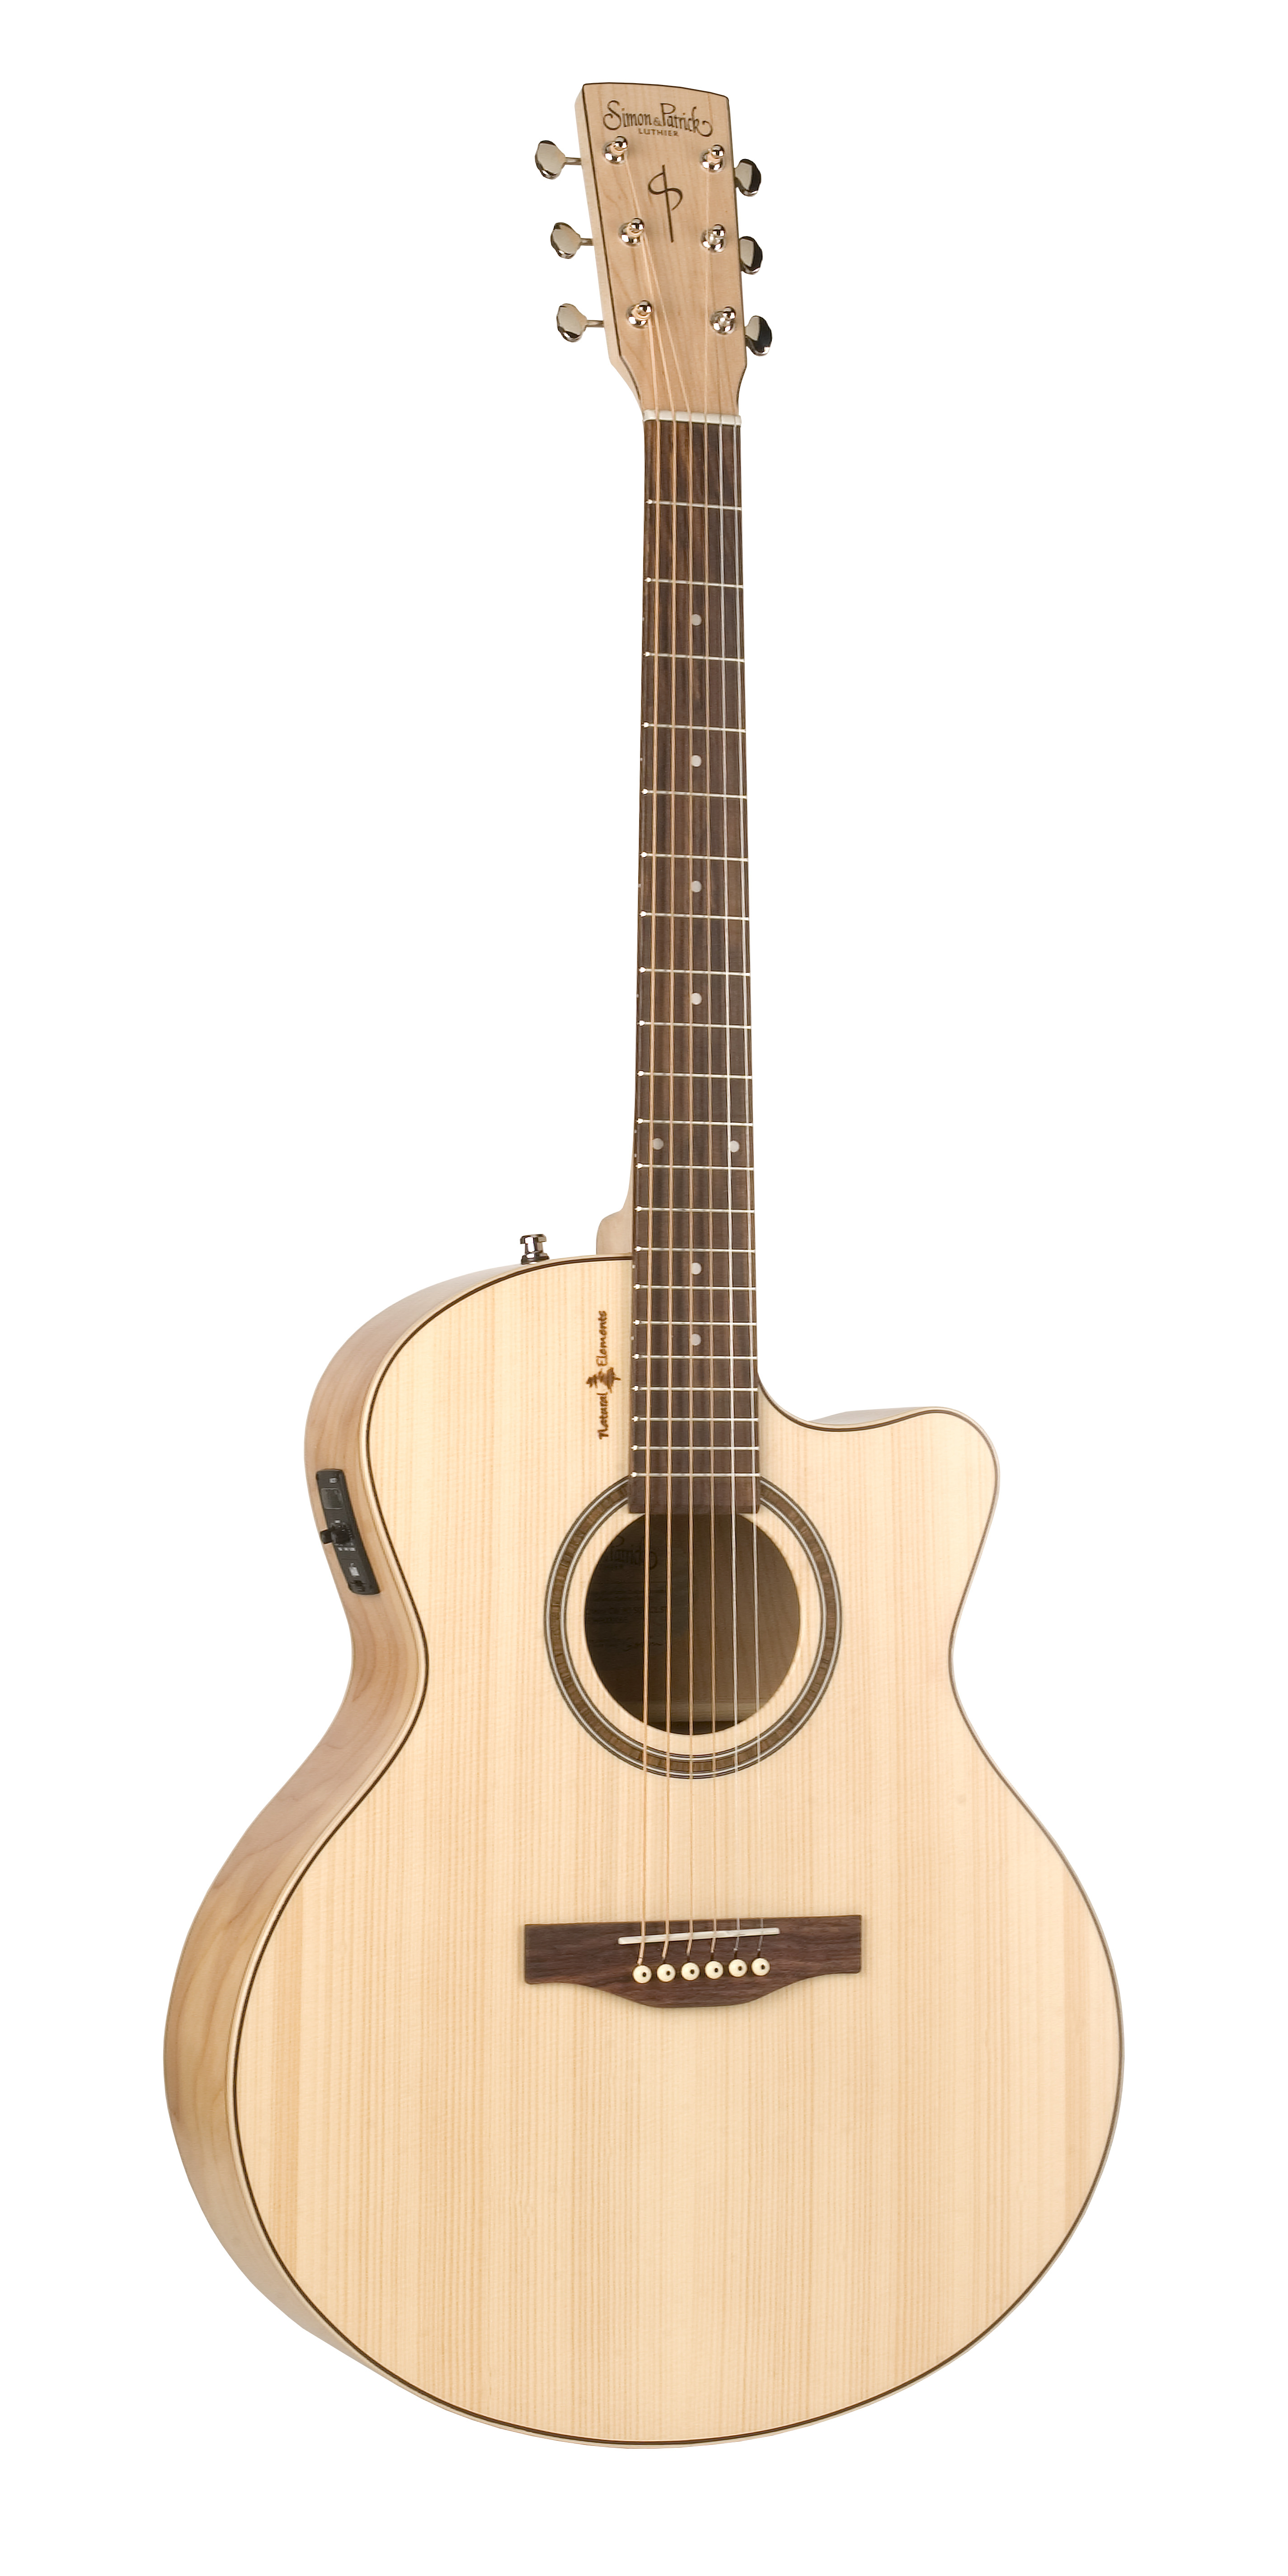 Acoustic Guitars - Jim Laabs Music Store